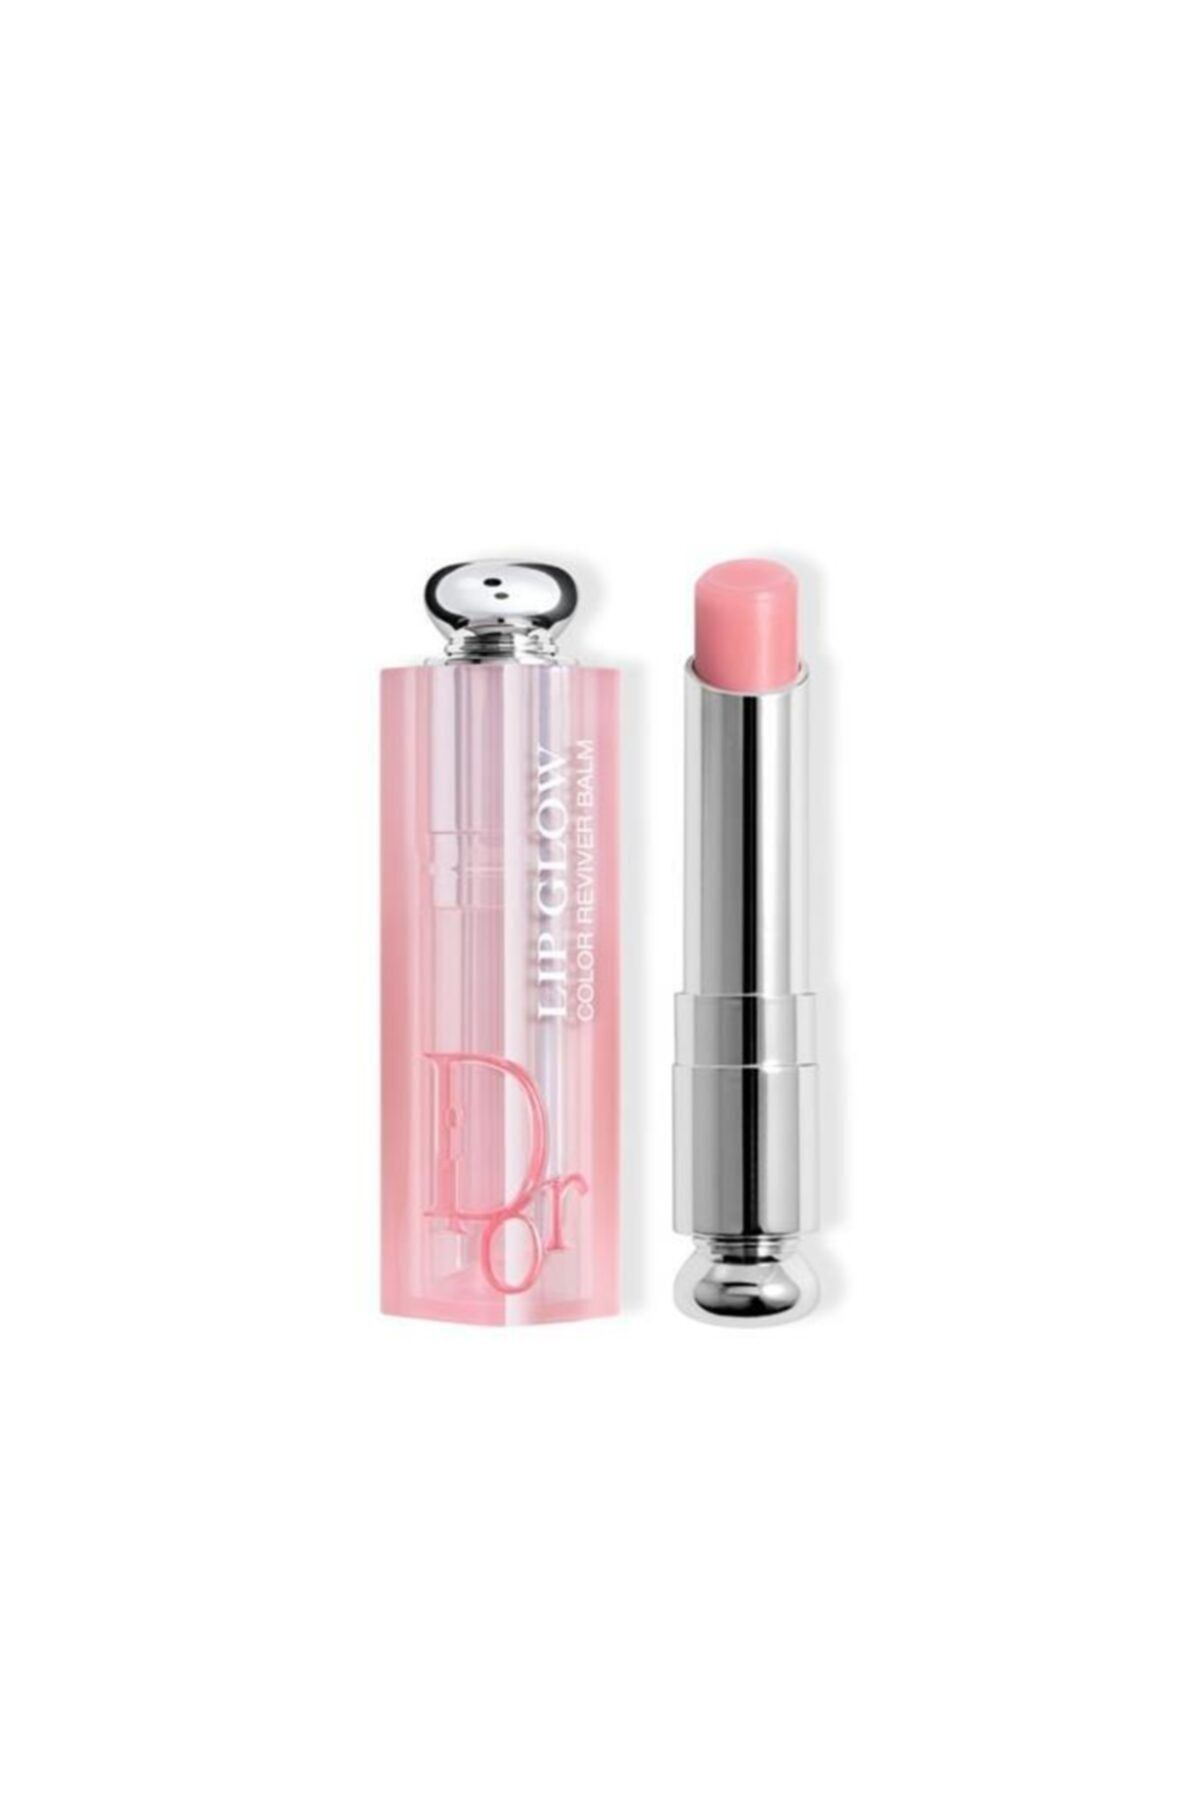 Dior Addict Lip Glow 001 Pink